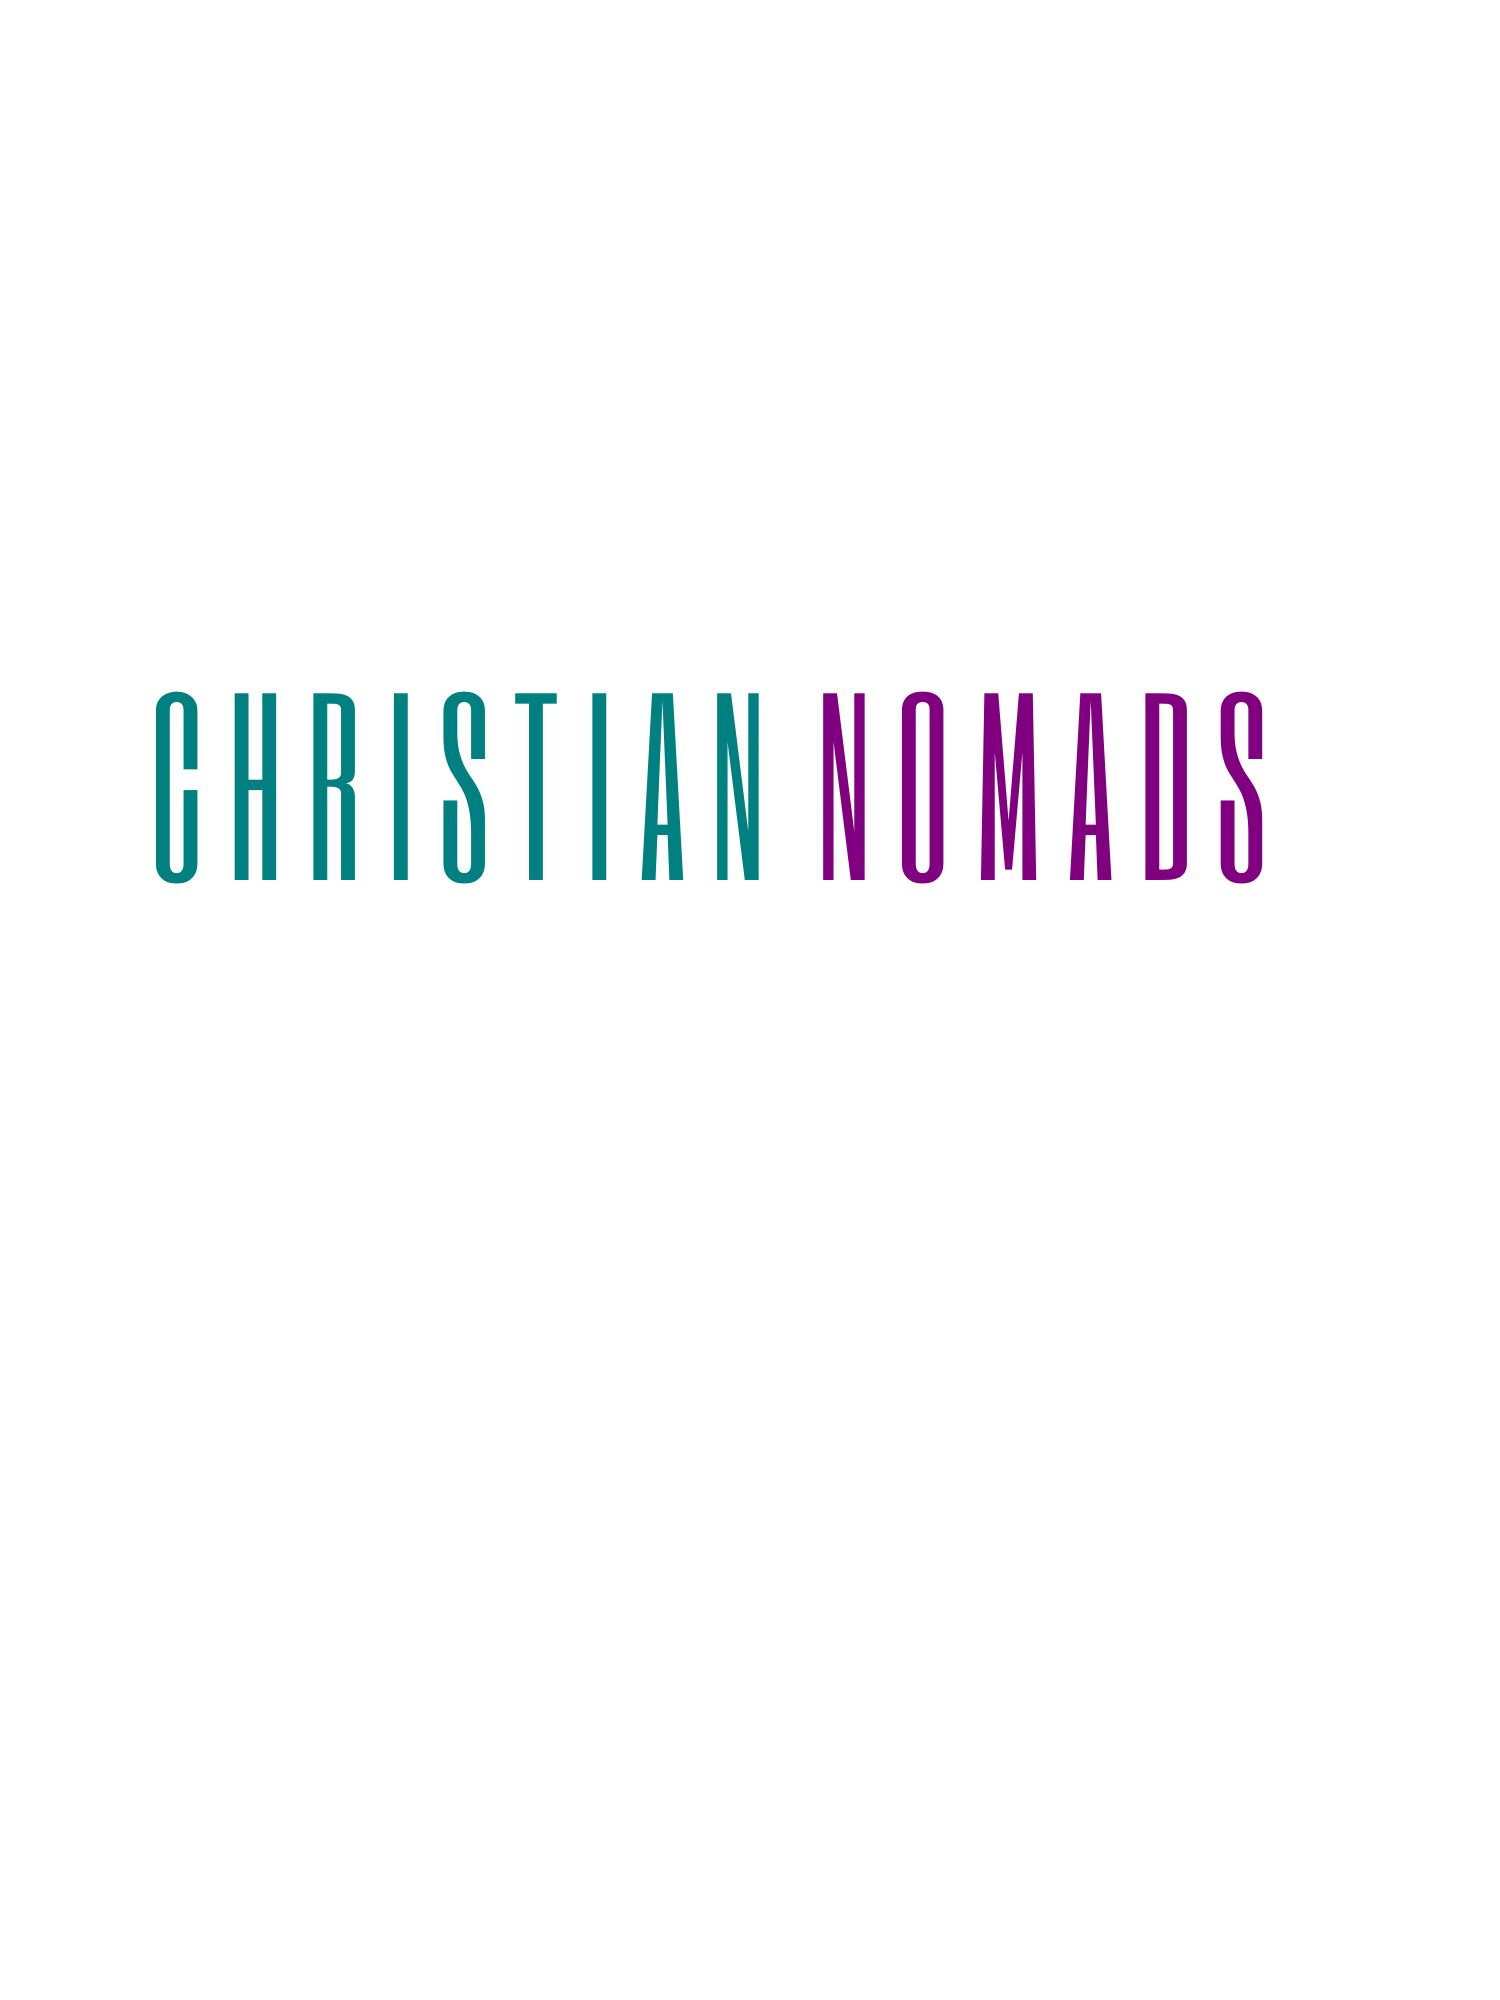 ChristianNomads